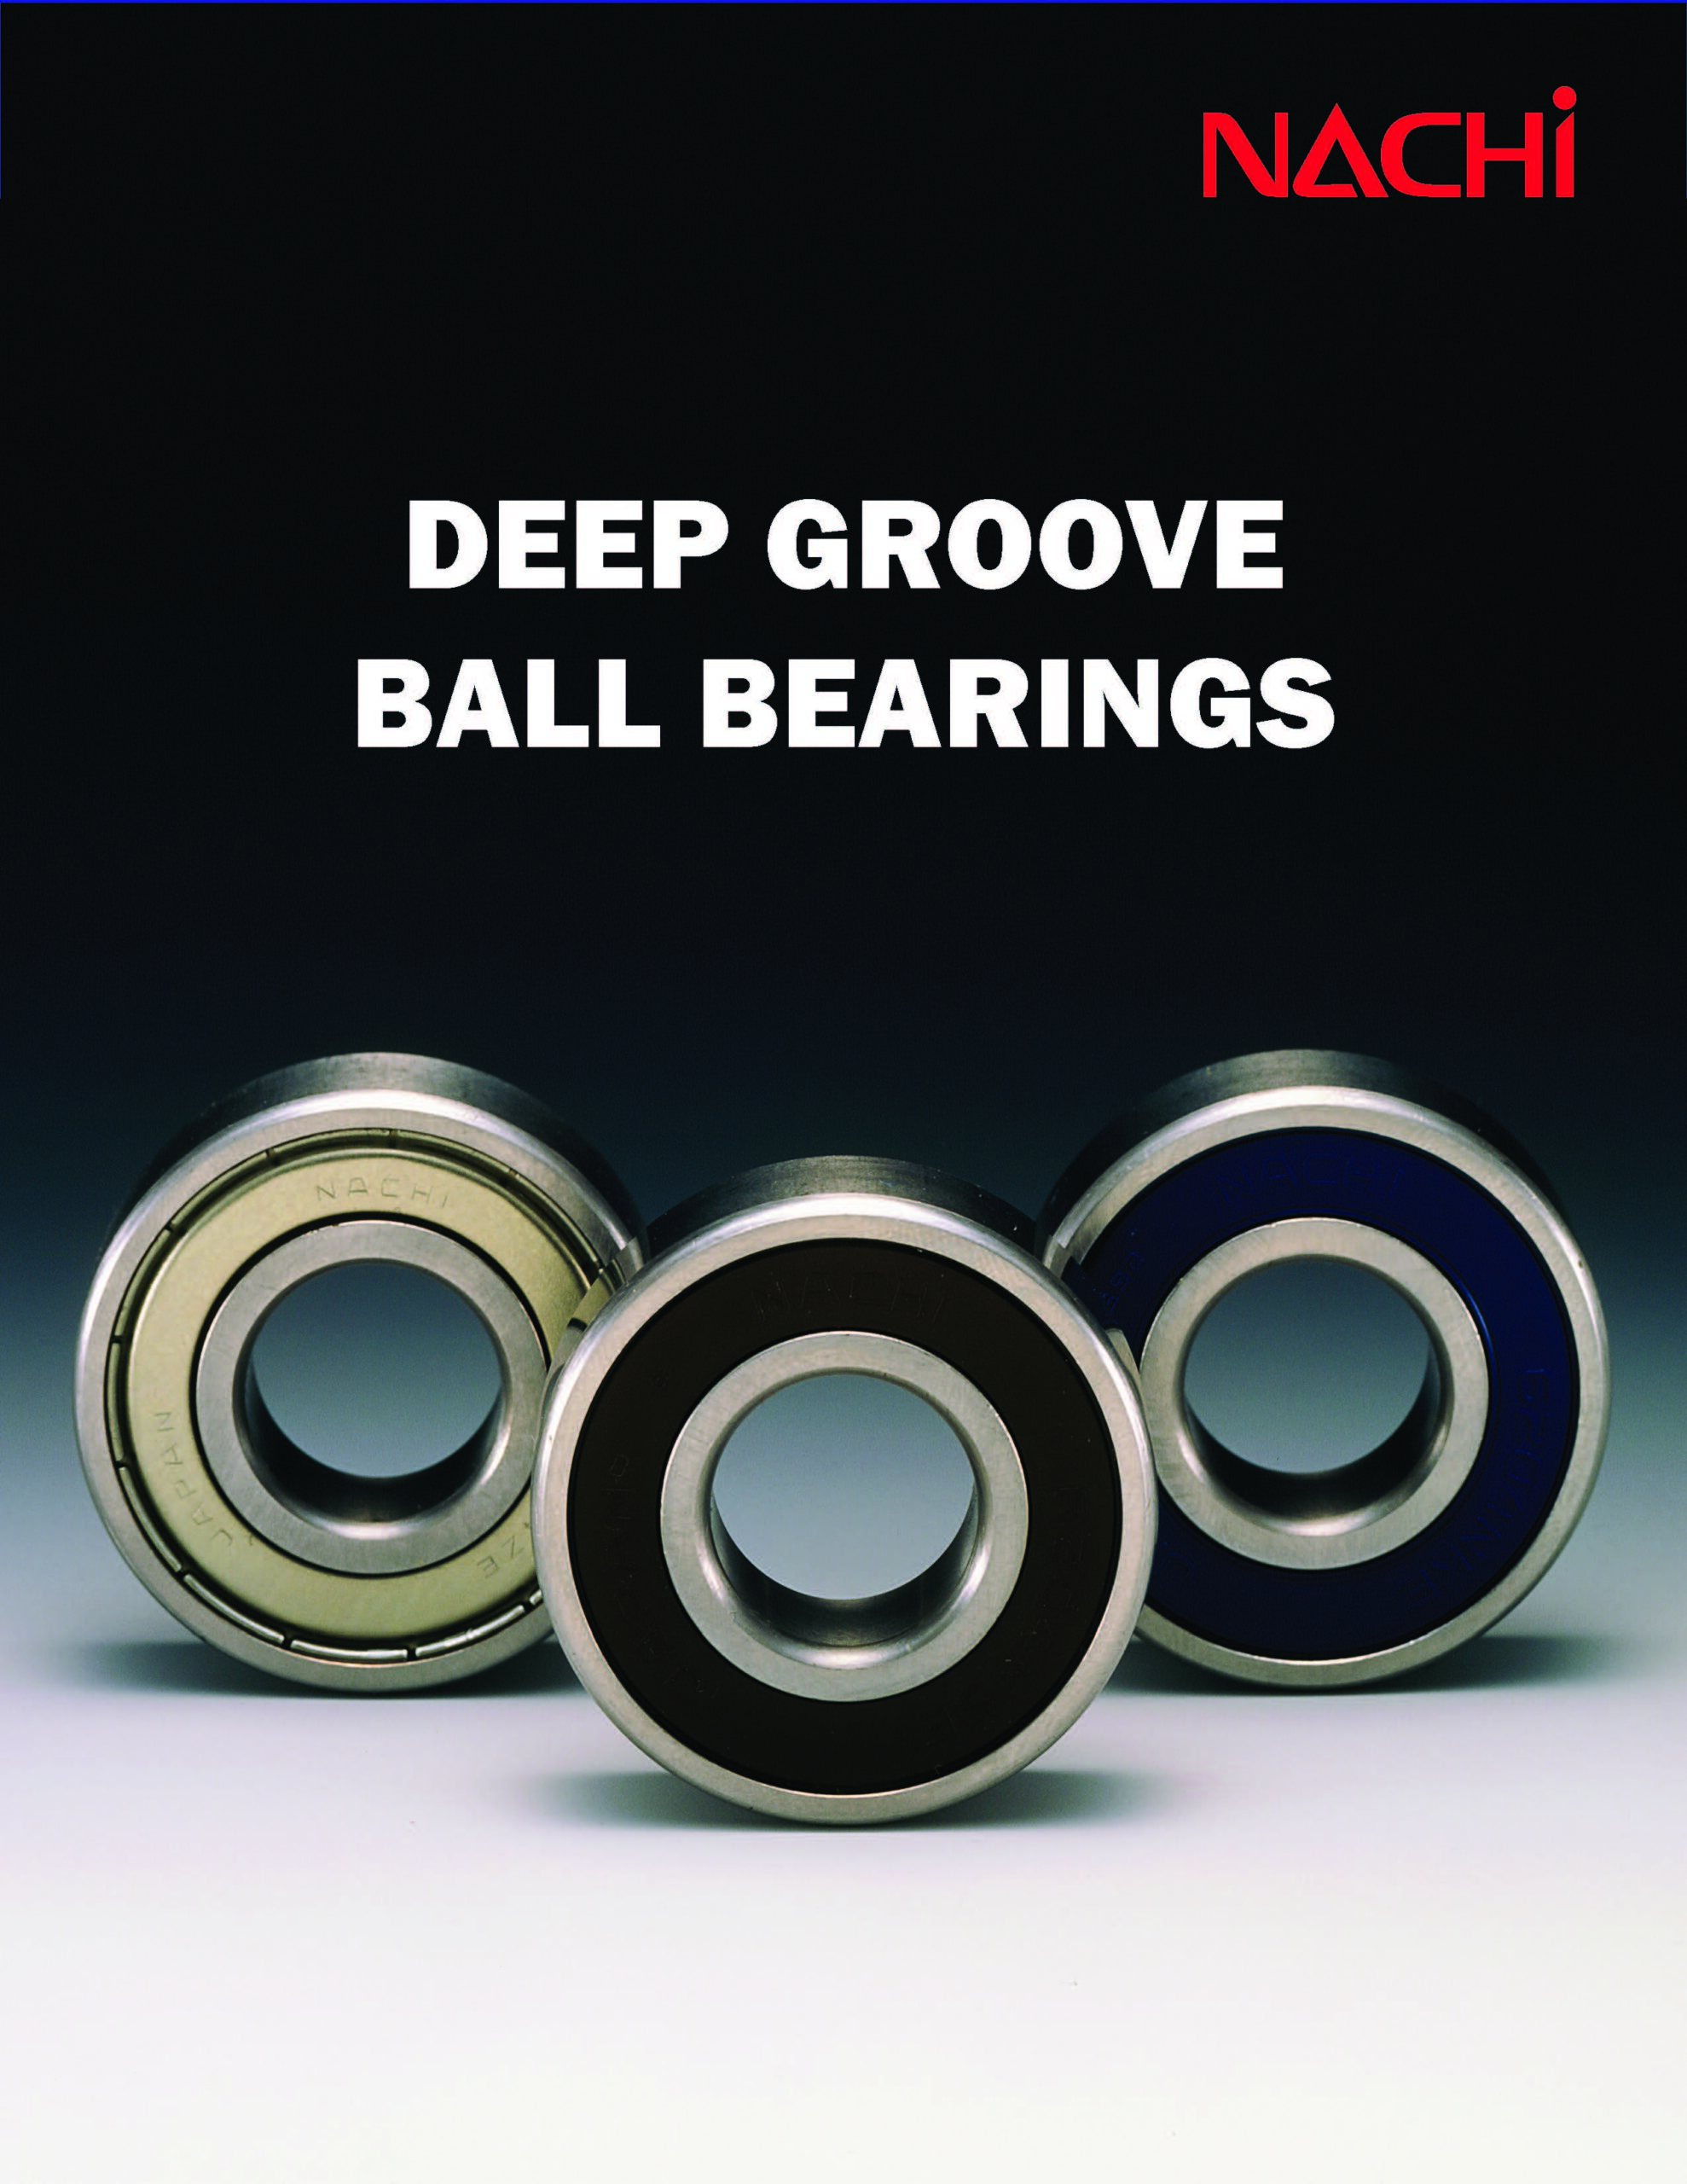 Nachi-Deep-Groove-Ball-Bearings Catalog